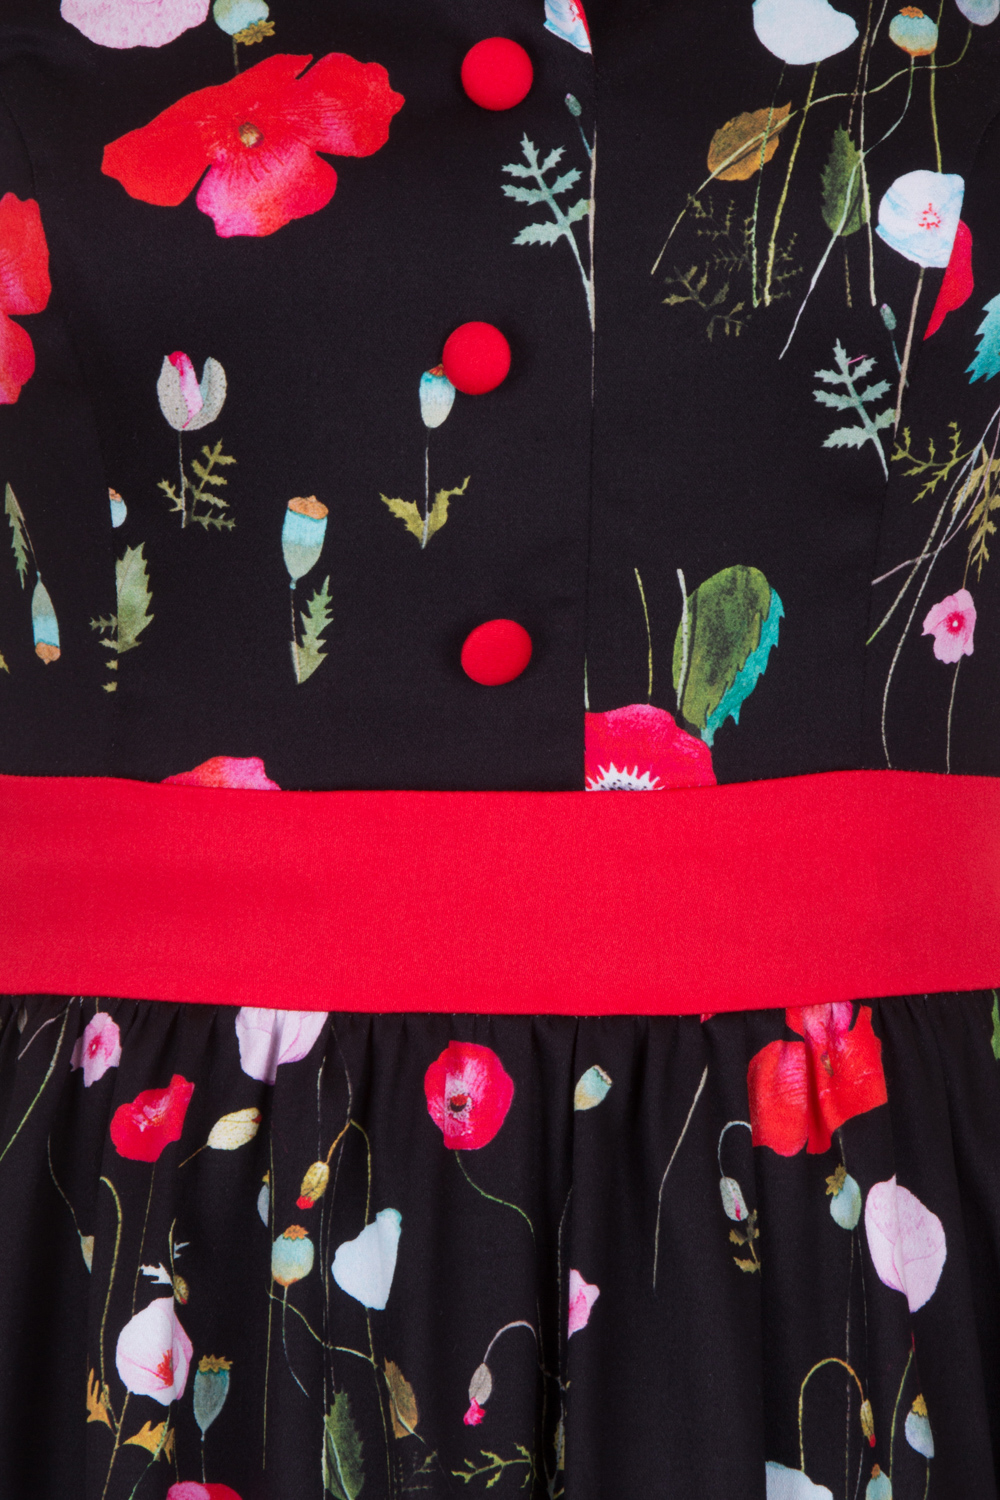 Multifloral Poppy Dress